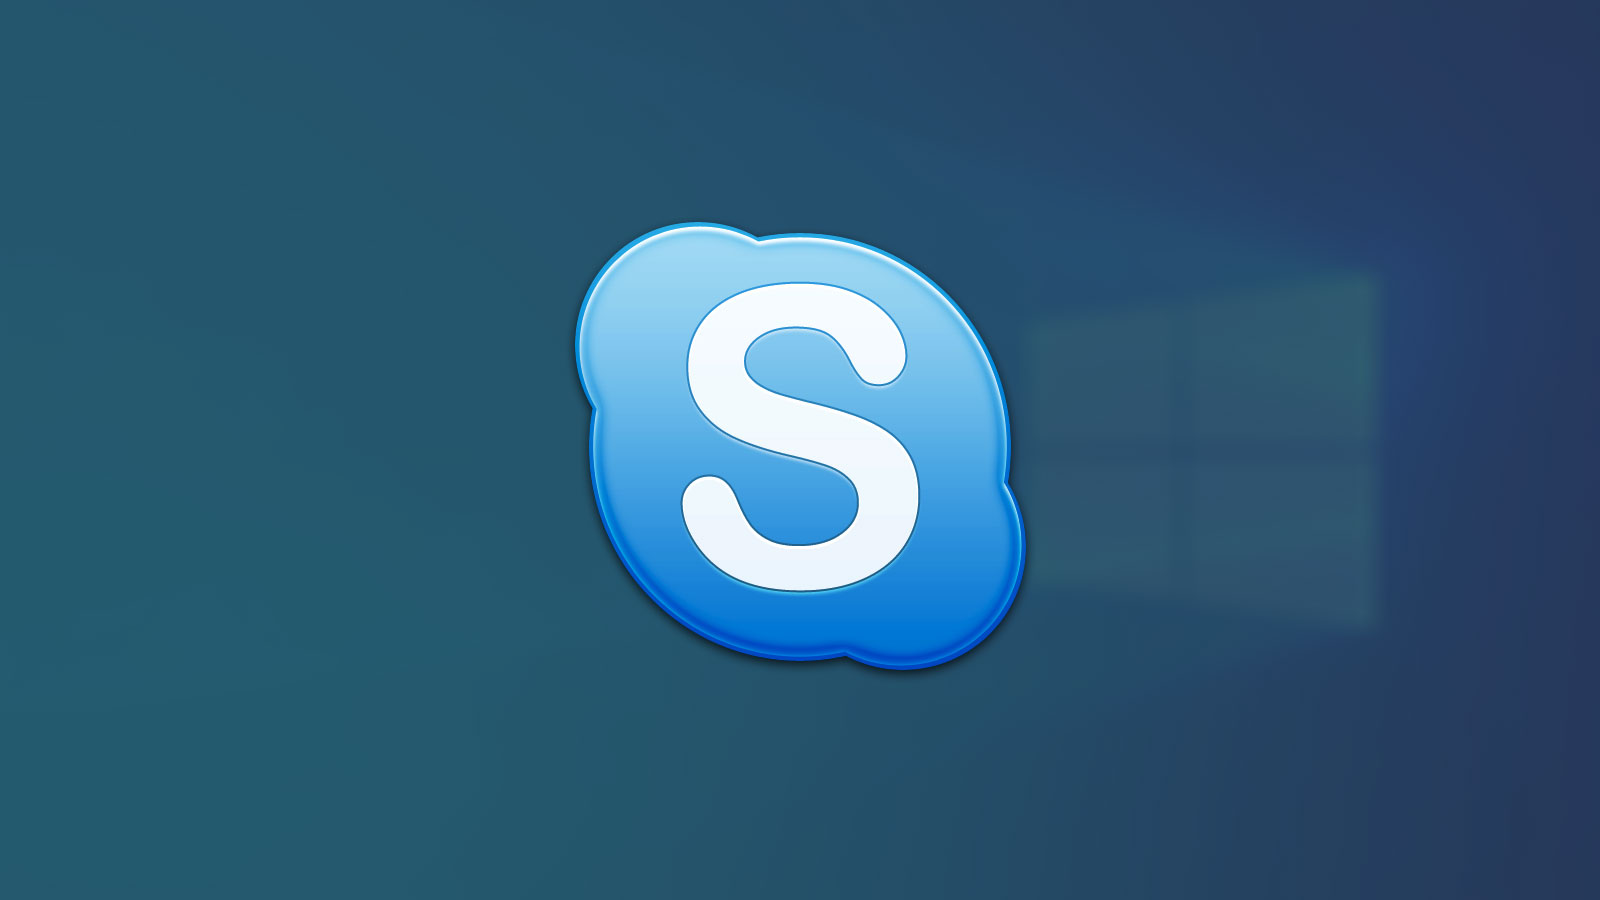 Windows 10 Skype Hd Title